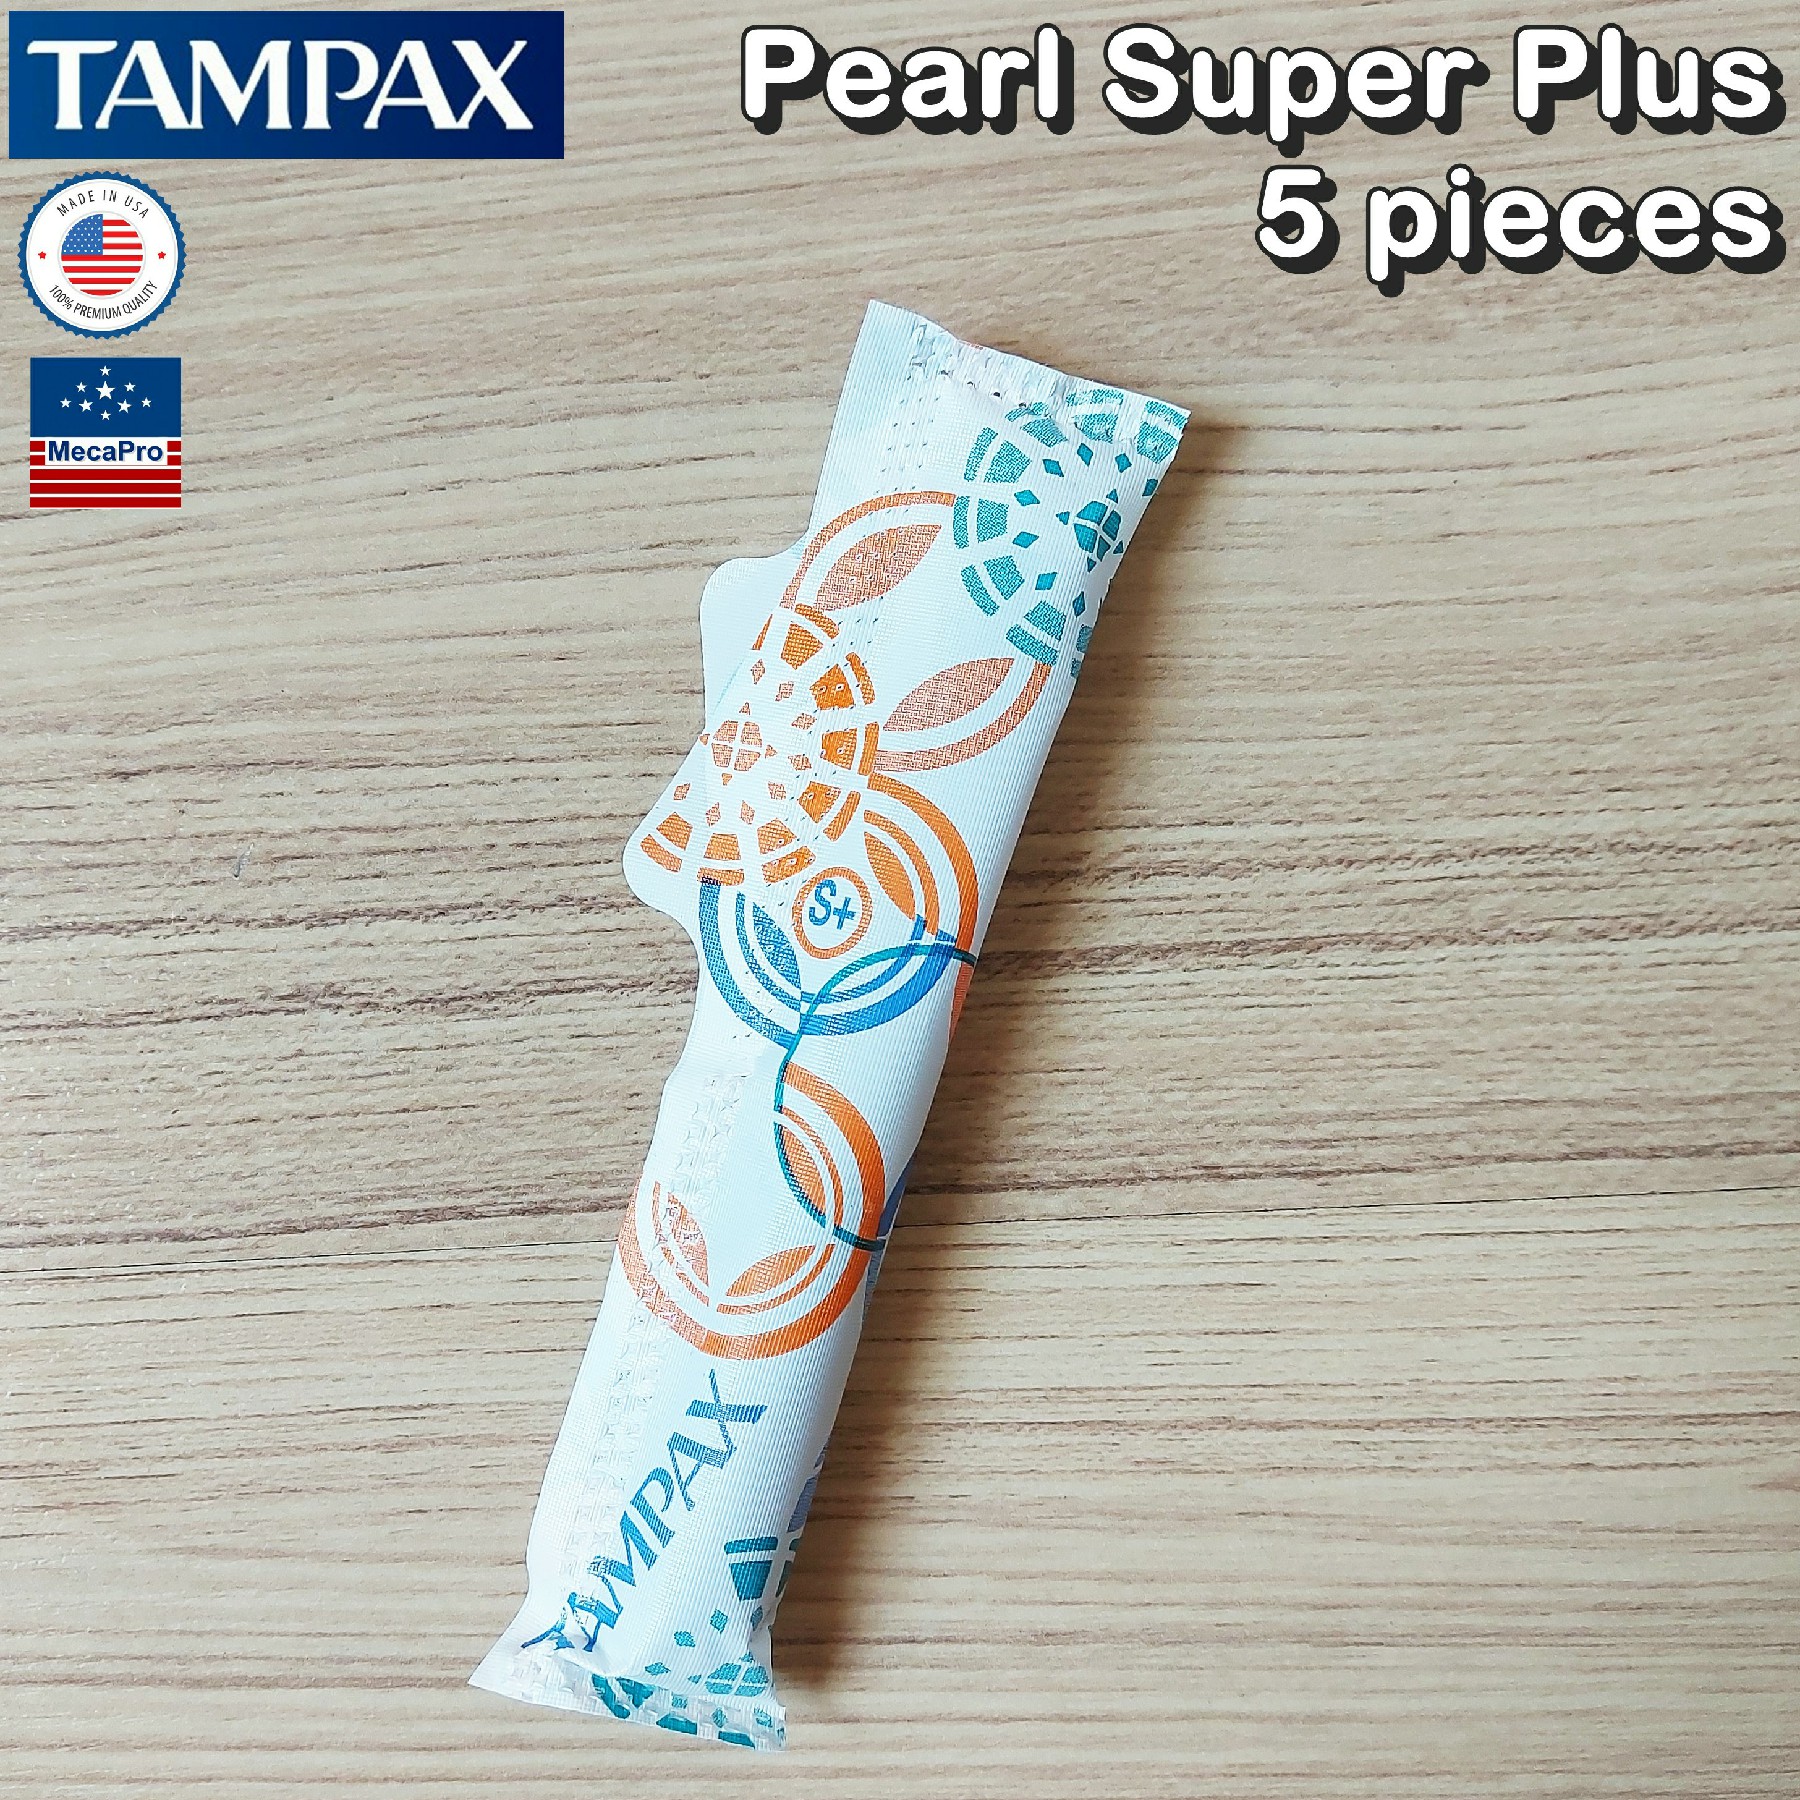 Tampax® Pearl Super Plus Plastic Tampons 5 pieces ผ้าอนามัยแบบสอด 5 ชิ้น เหมาะกับวันมามาก